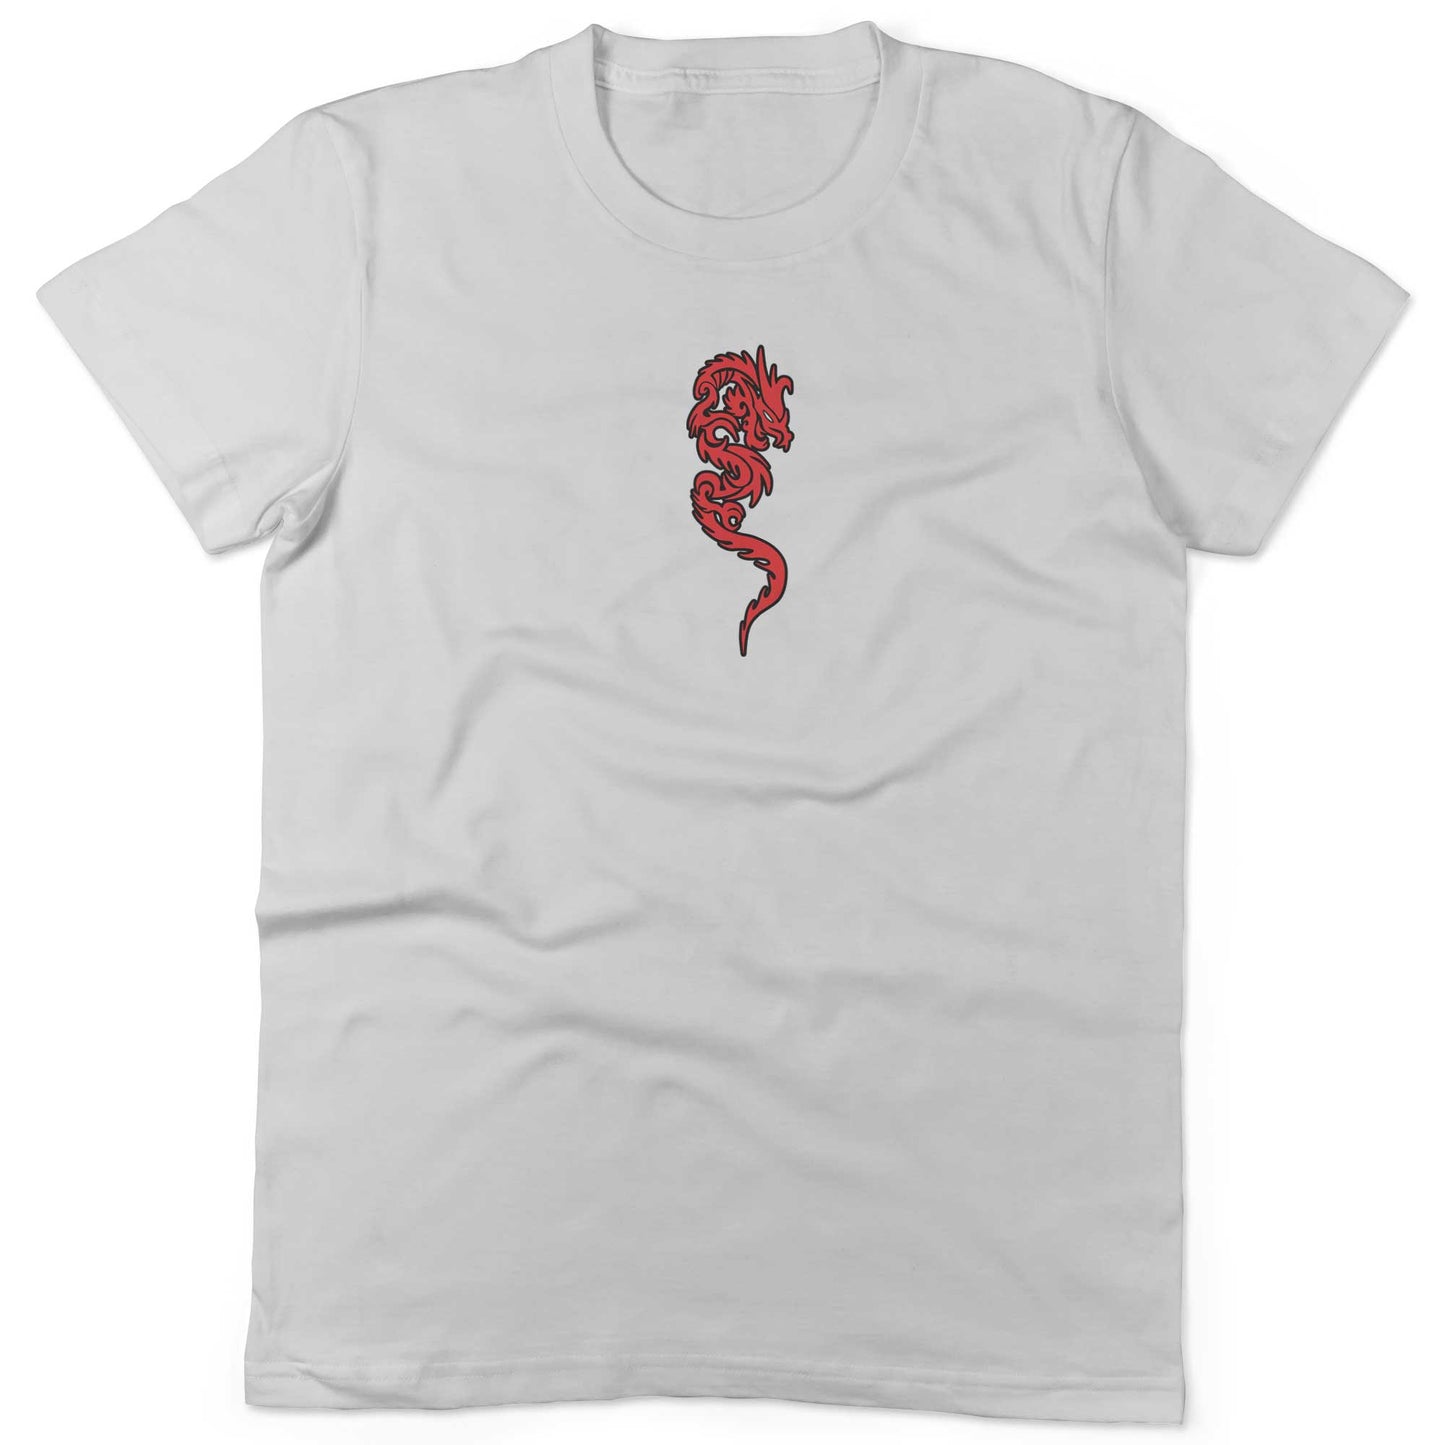 Martial Arts Unisex Or Women's Cotton T-shirt-White-Woman